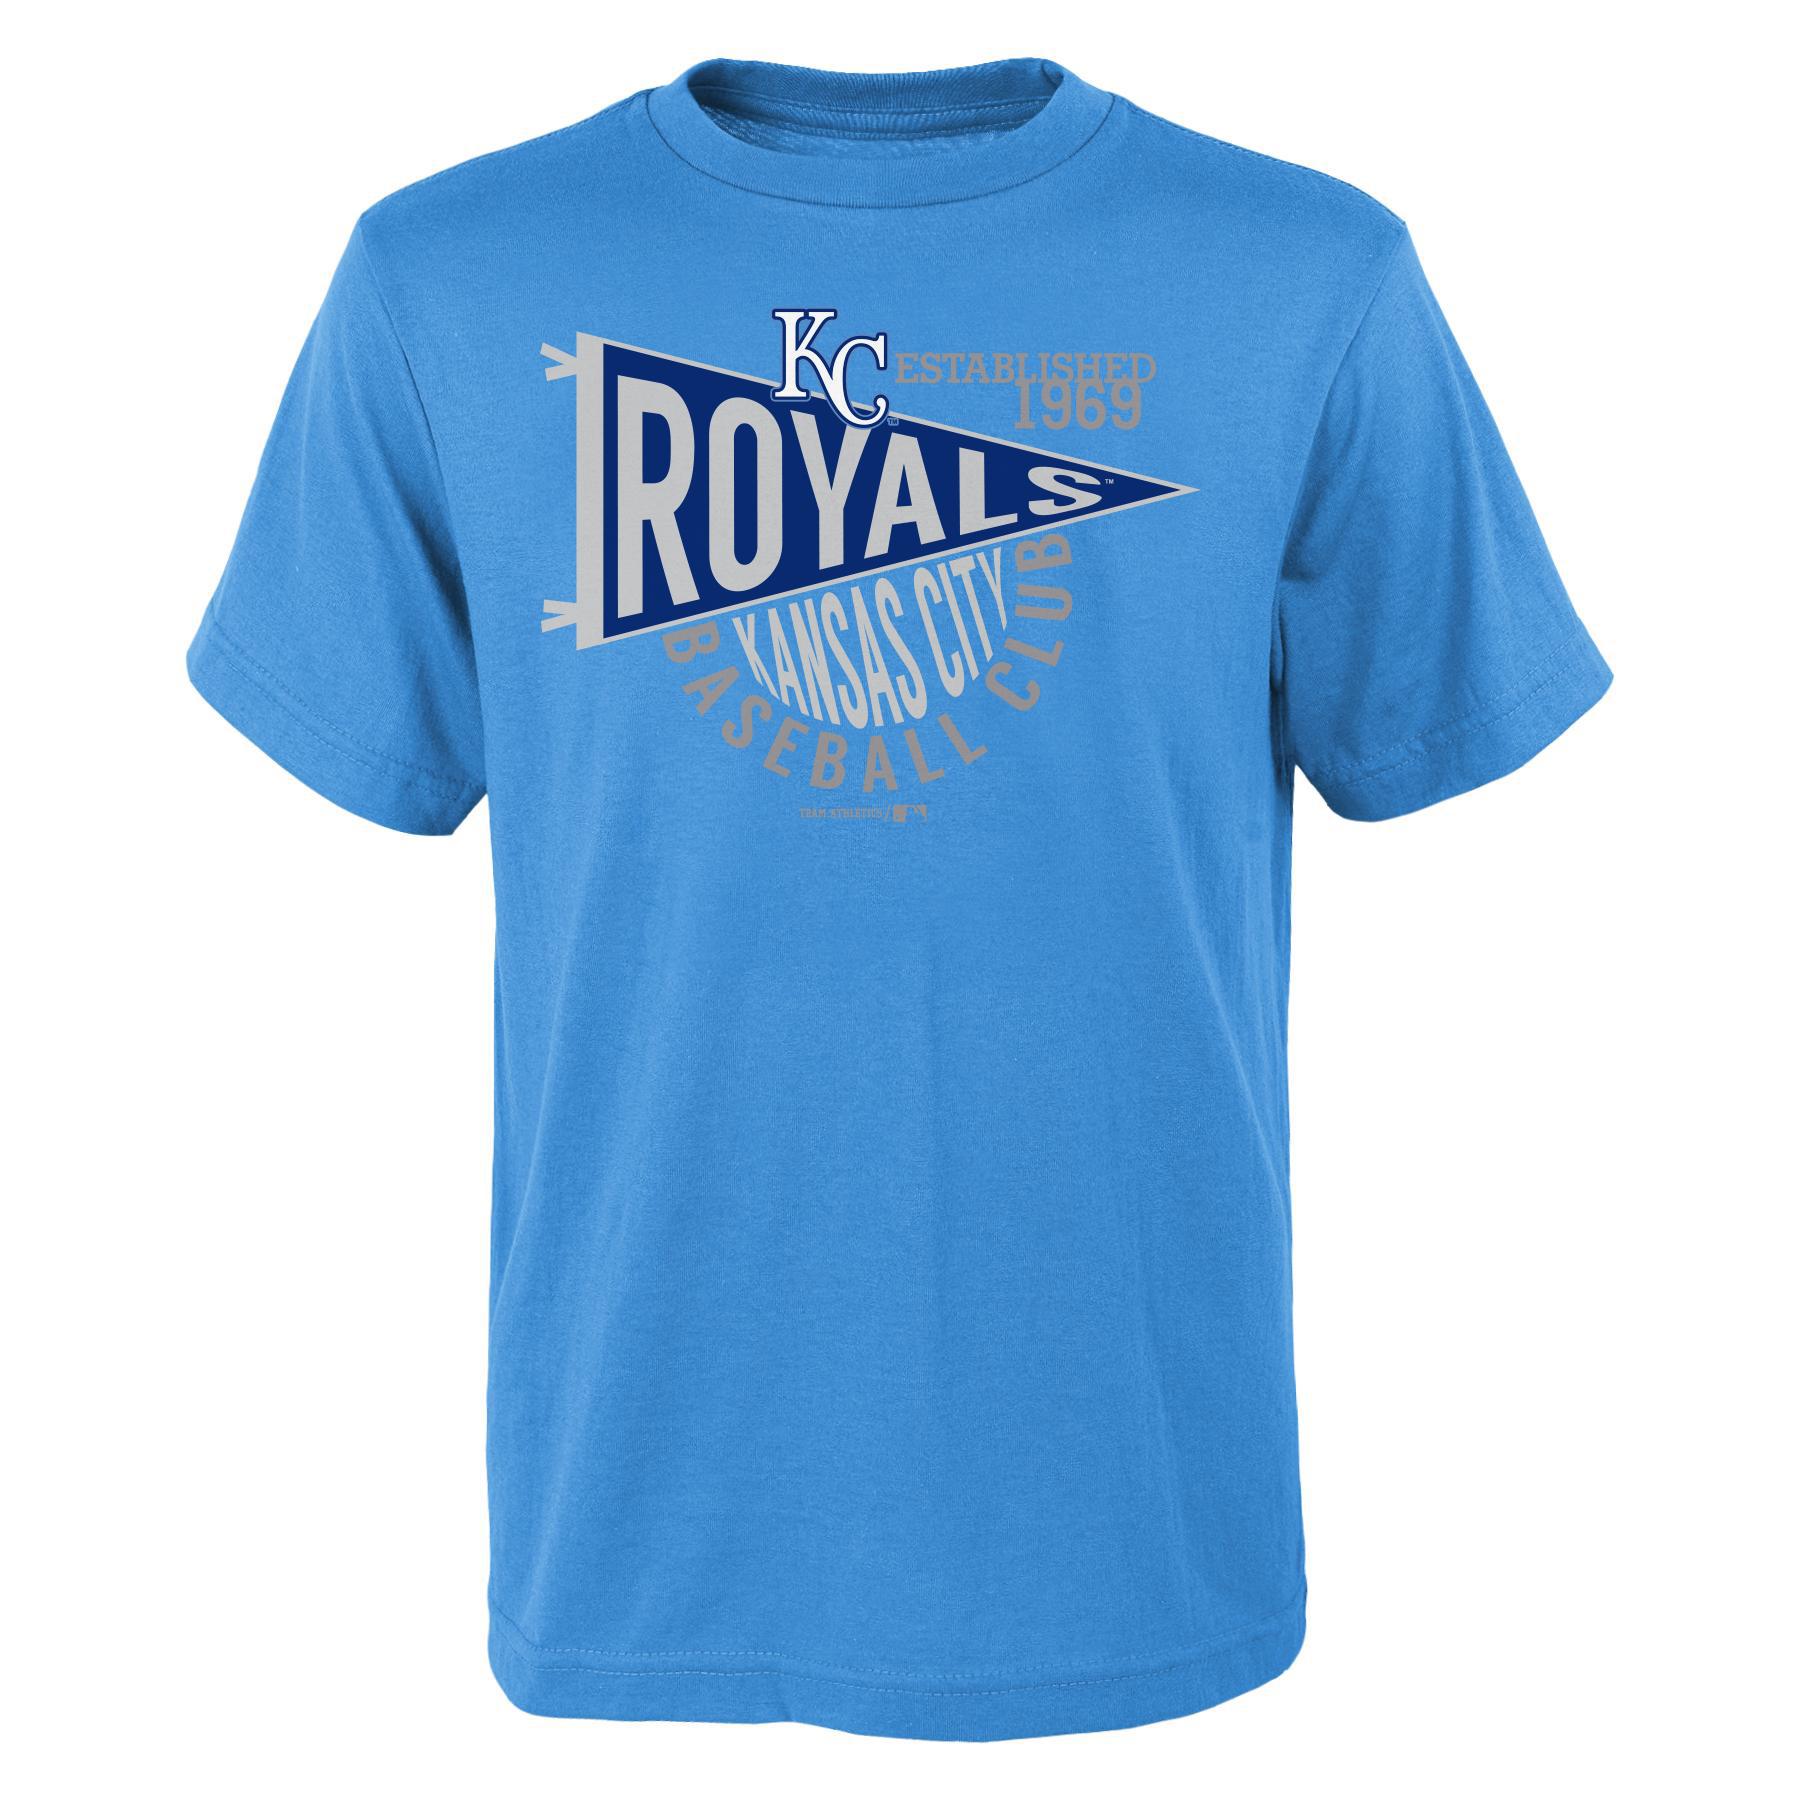 MLB Boy's Retro Graphic T-Shirt - Kansas City Royals